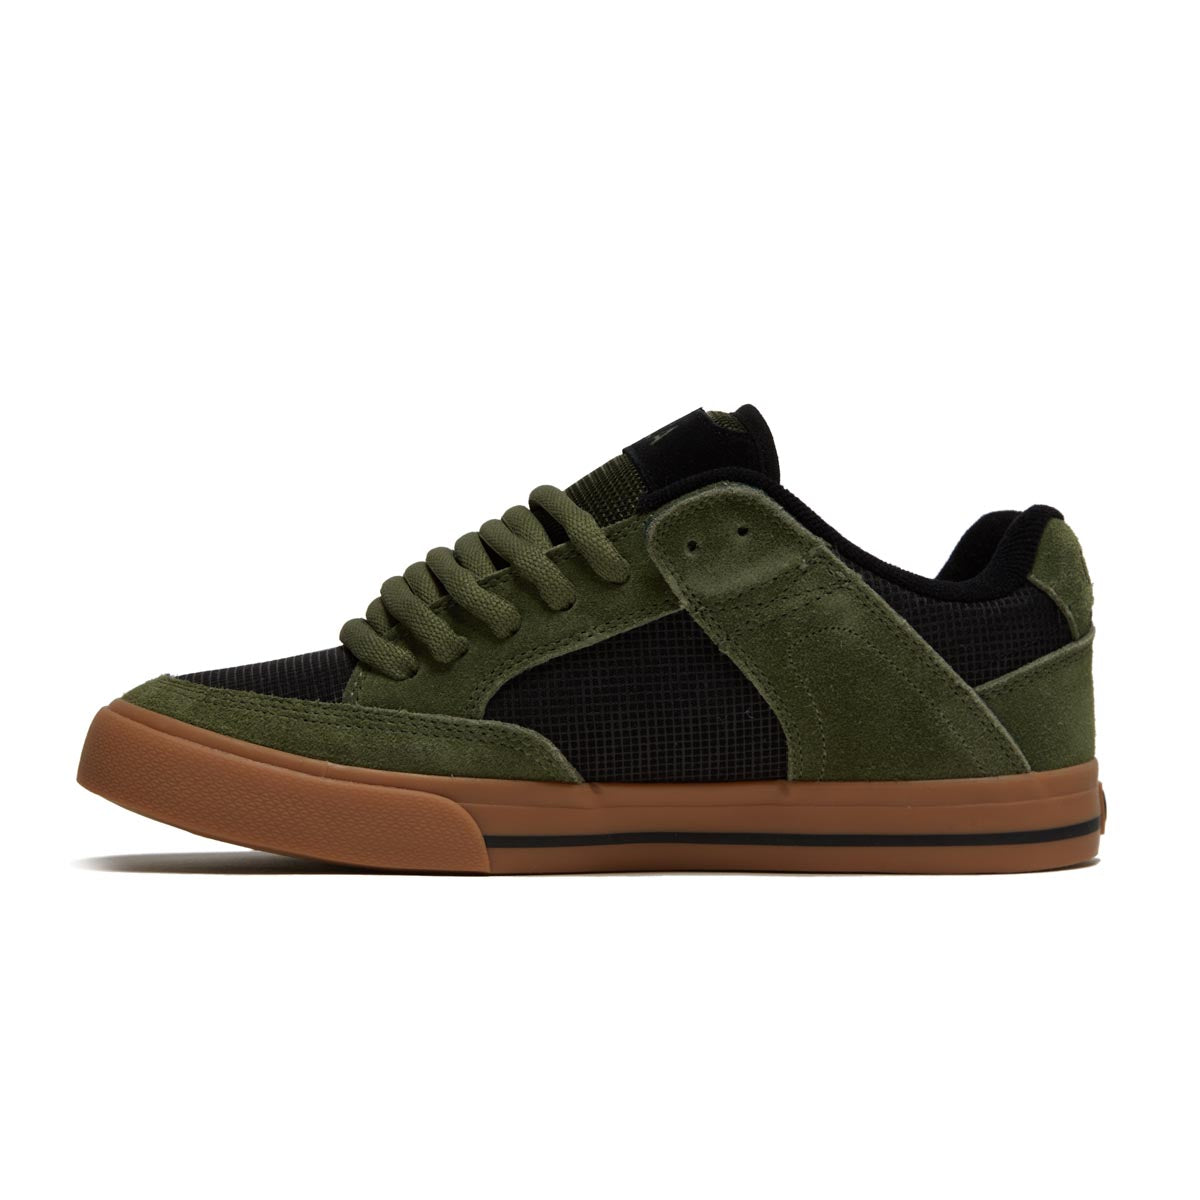 C1rca 205 Vulc Se Shoes - Black/Military Green image 2